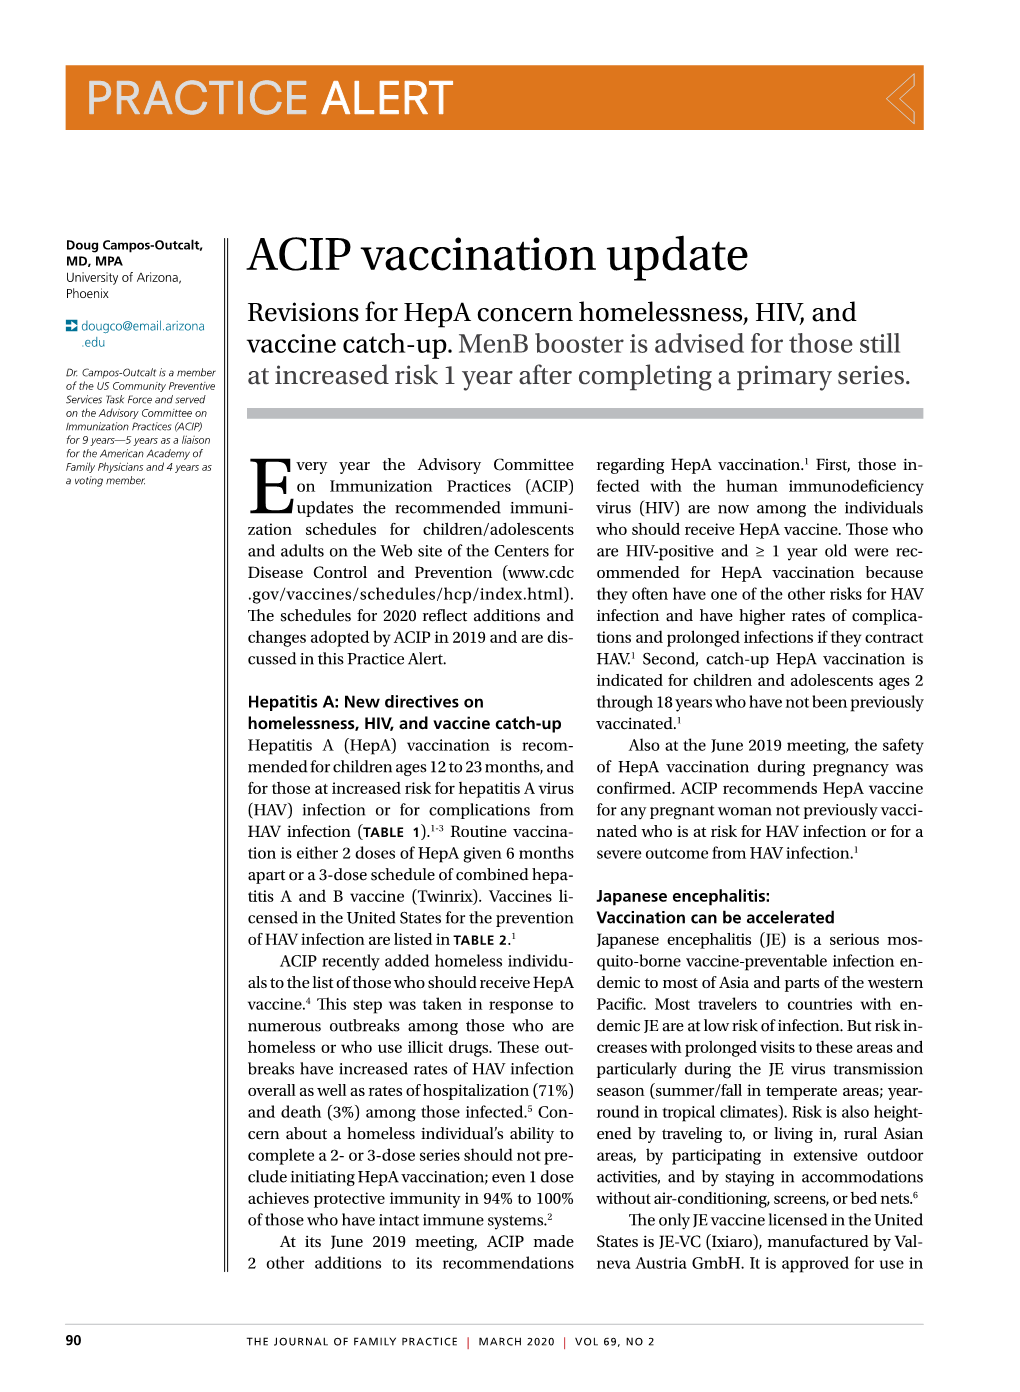 ACIP Vaccination Update University of Arizona, Phoenix